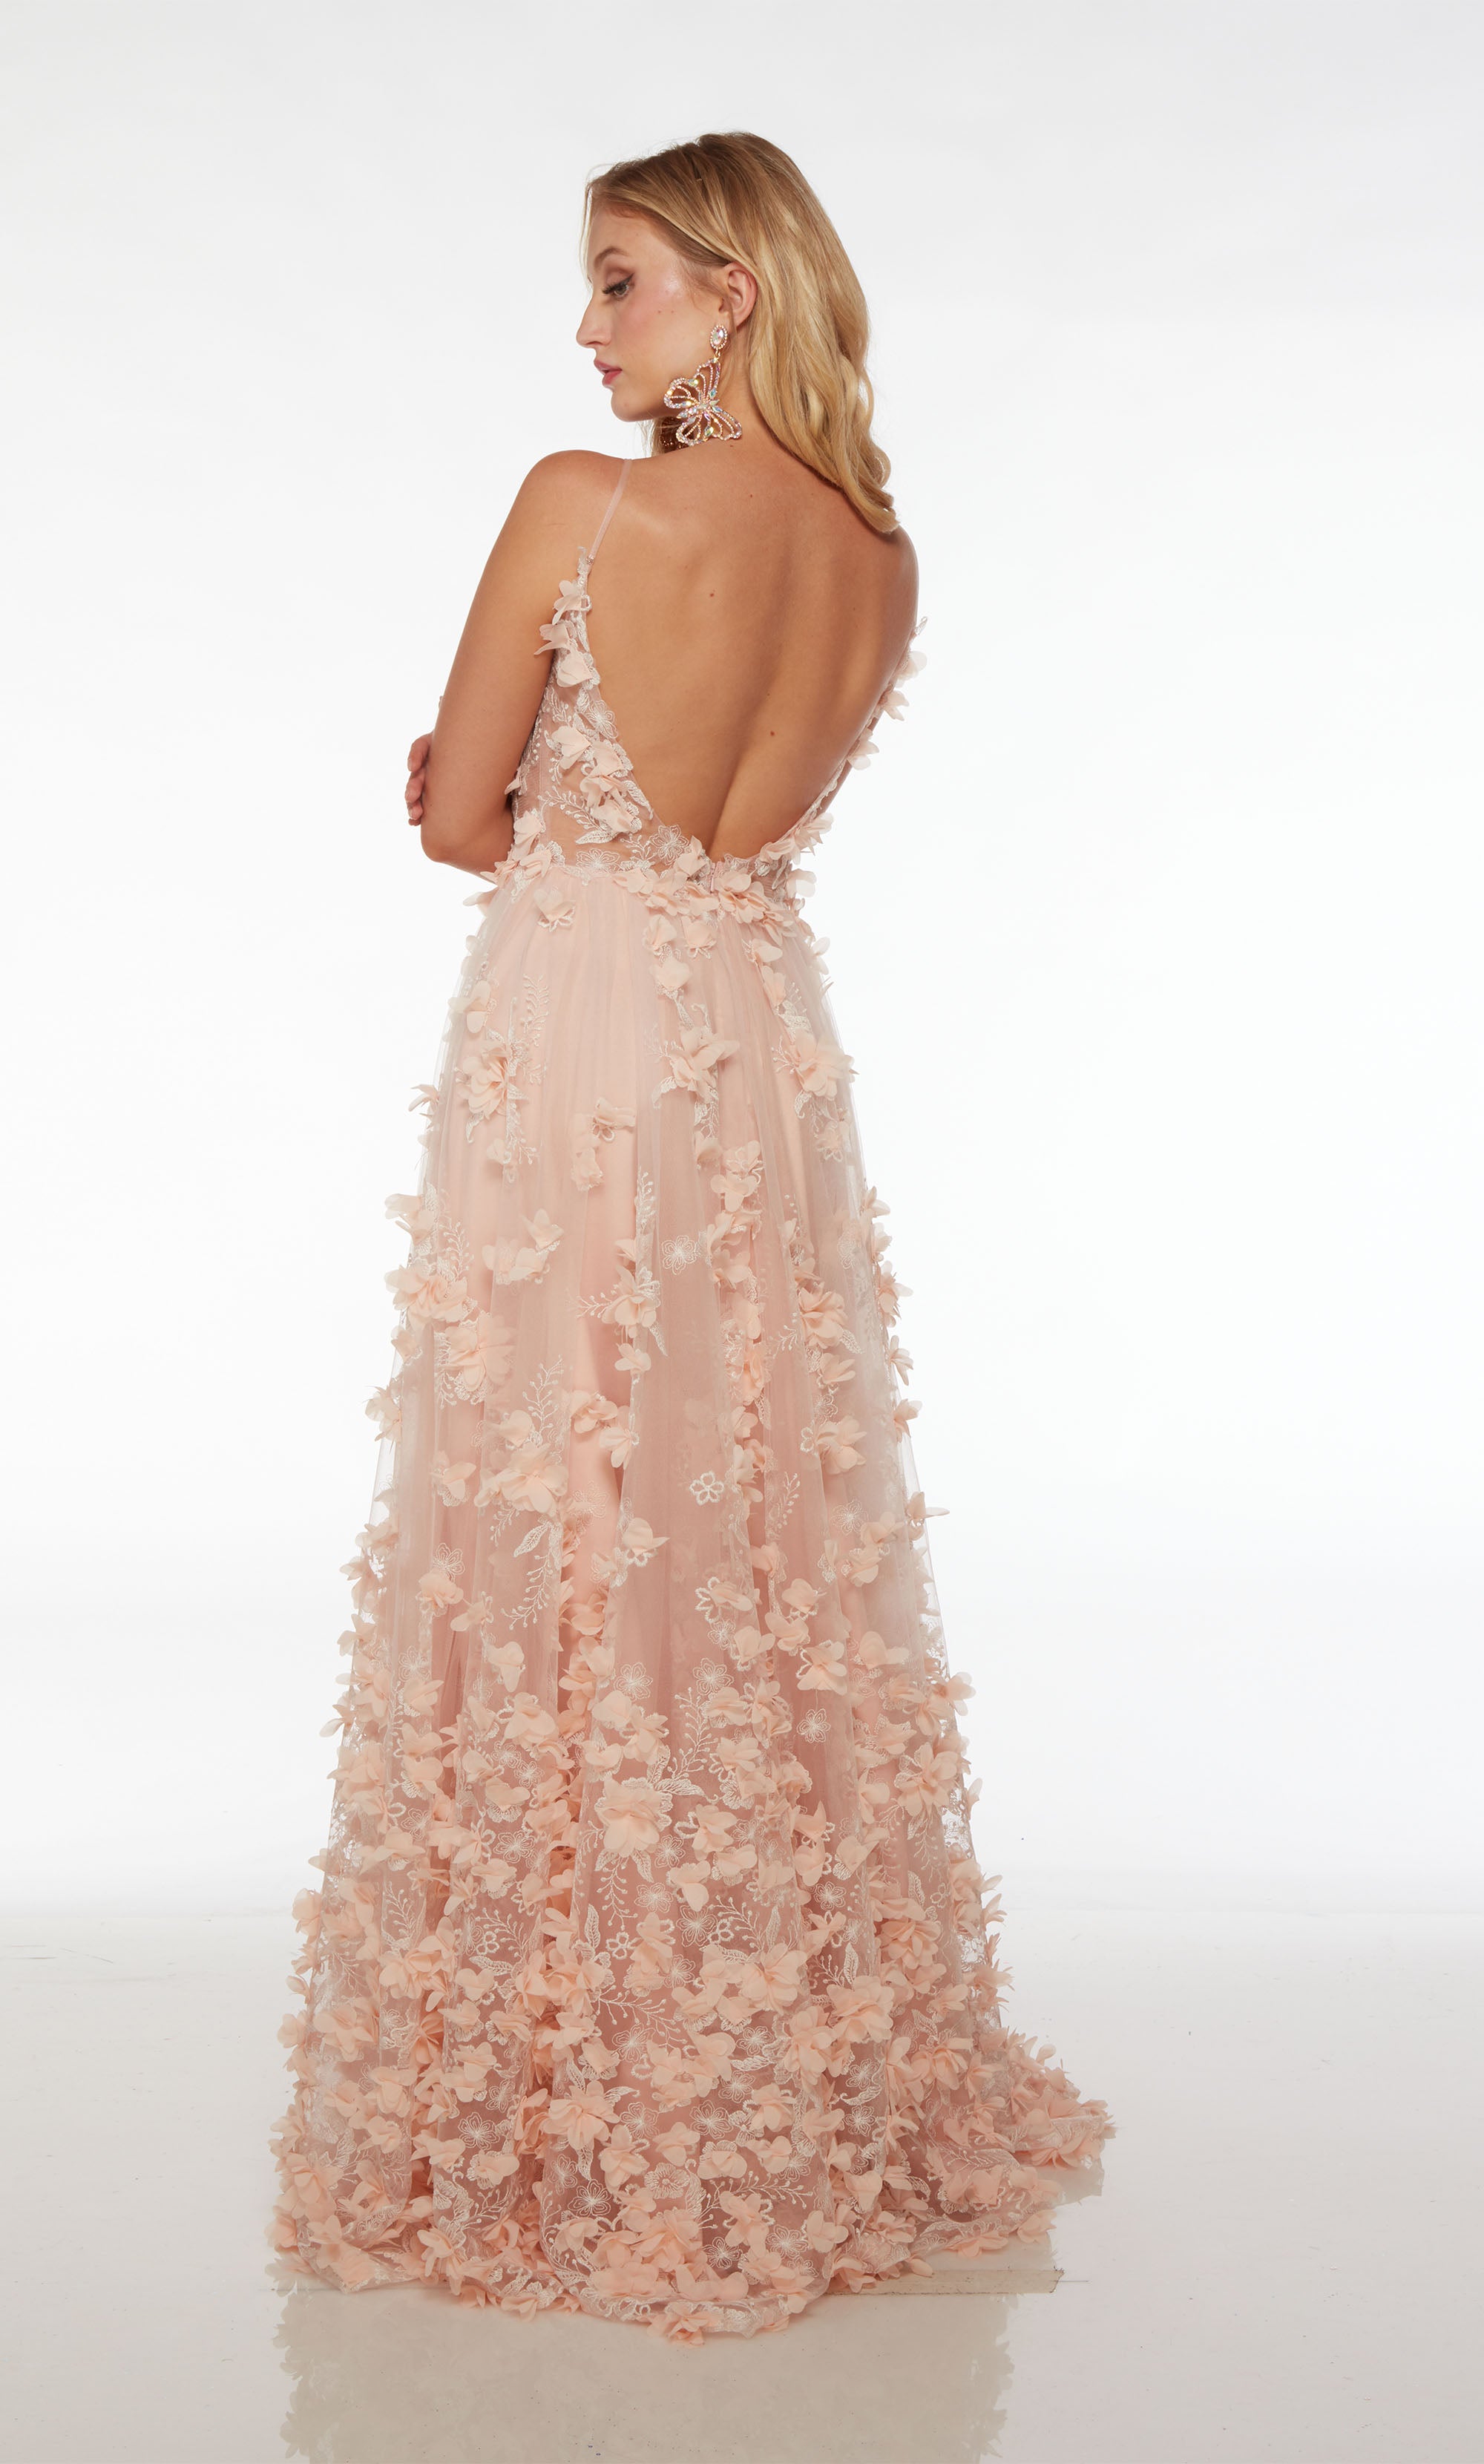 Retro Lace Wedding Dresses 3D Floral Strapless Blush Pink Plus Size Sweep  Train | eBay